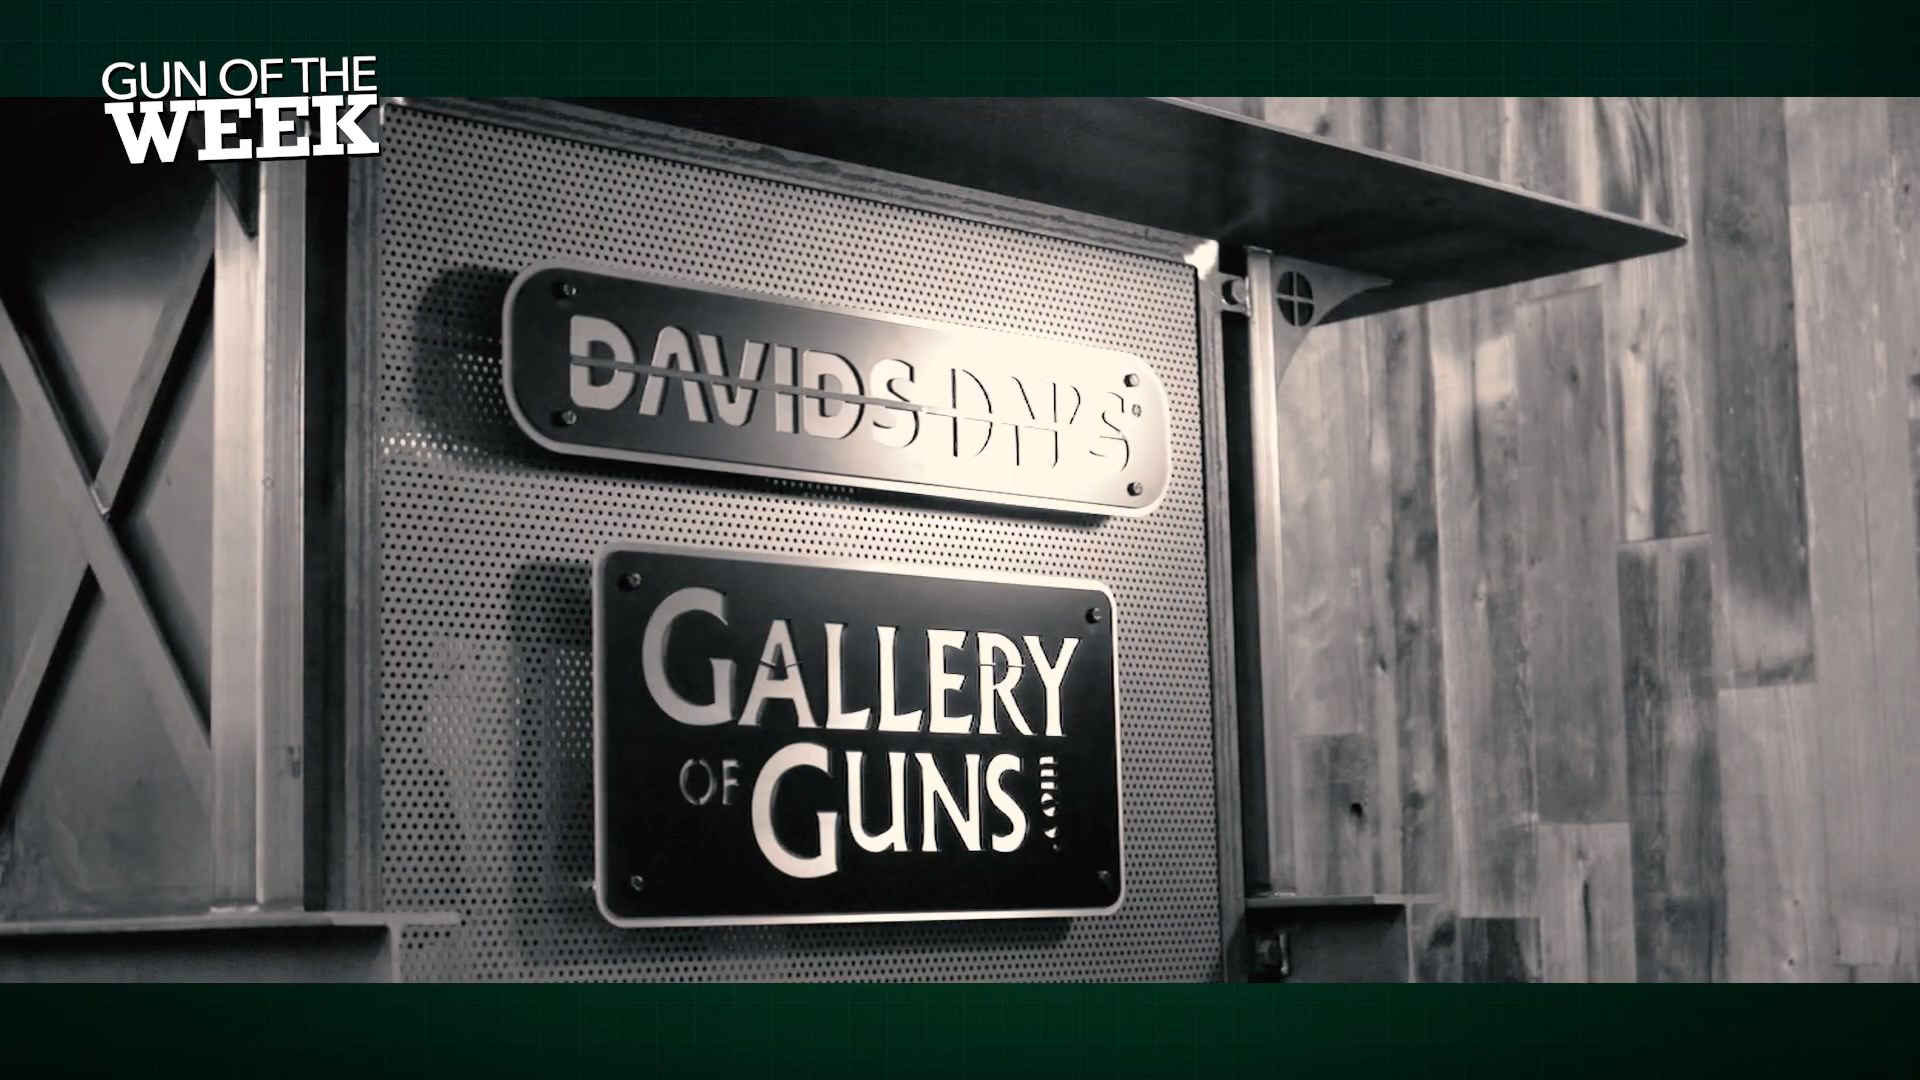 Davidson's Gallery of guns .com sight logo GUN OF THE WEEK text overlay on image